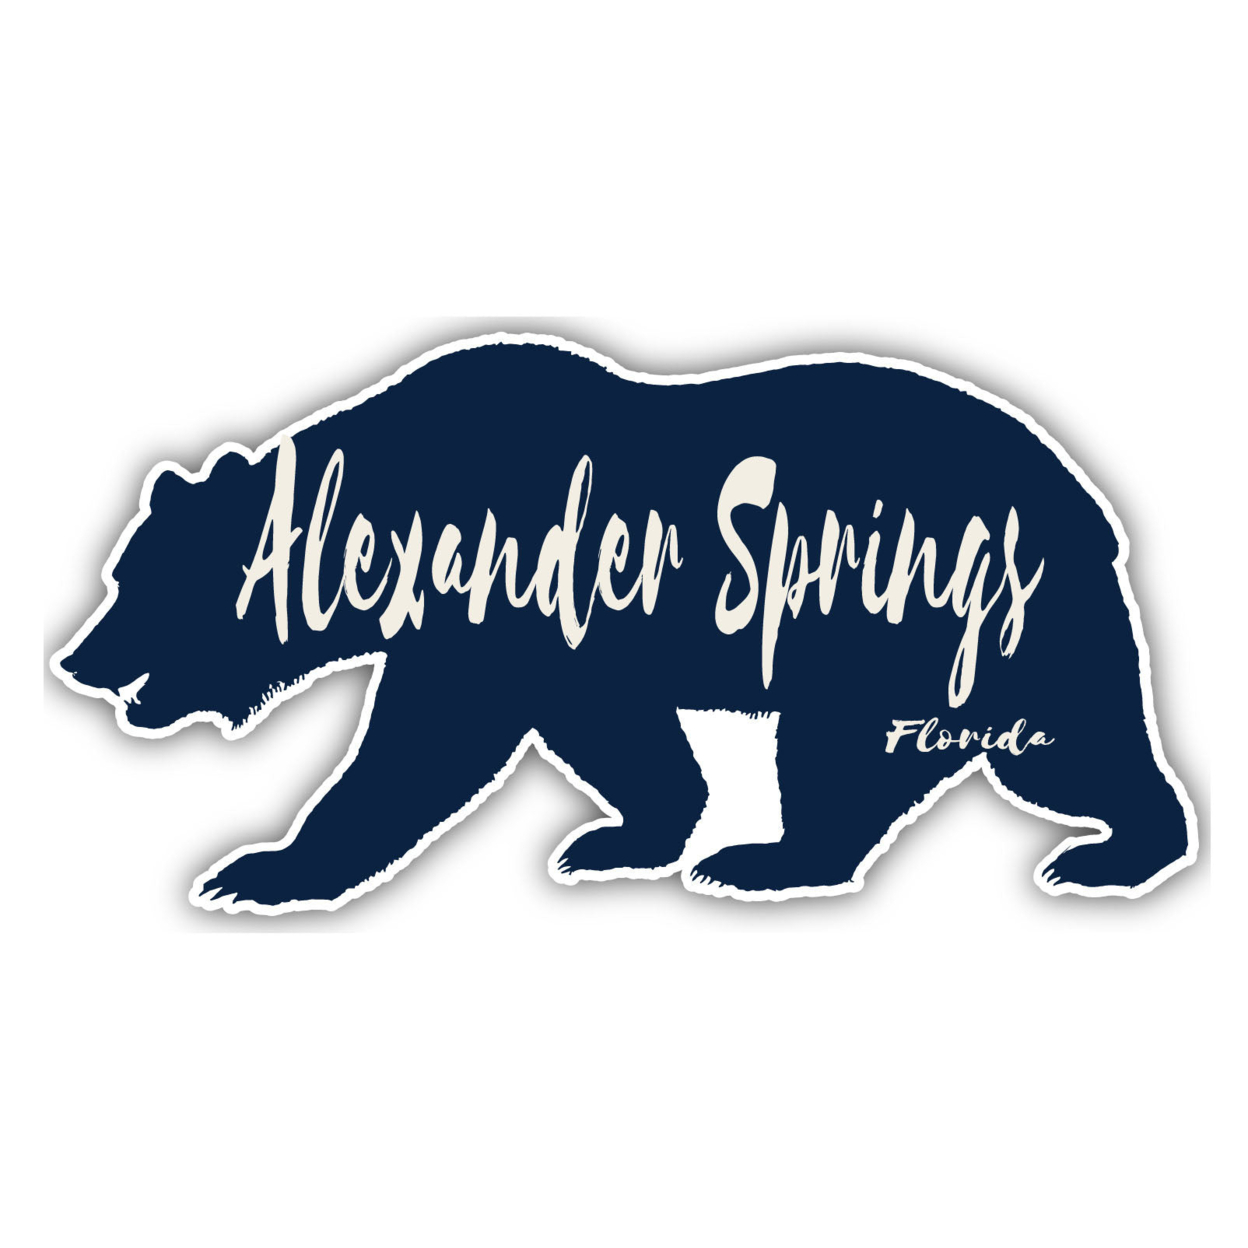 Alexander Springs Florida Souvenir Decorative Stickers (Choose Theme And Size) - Single Unit, 4-Inch, Camp Life